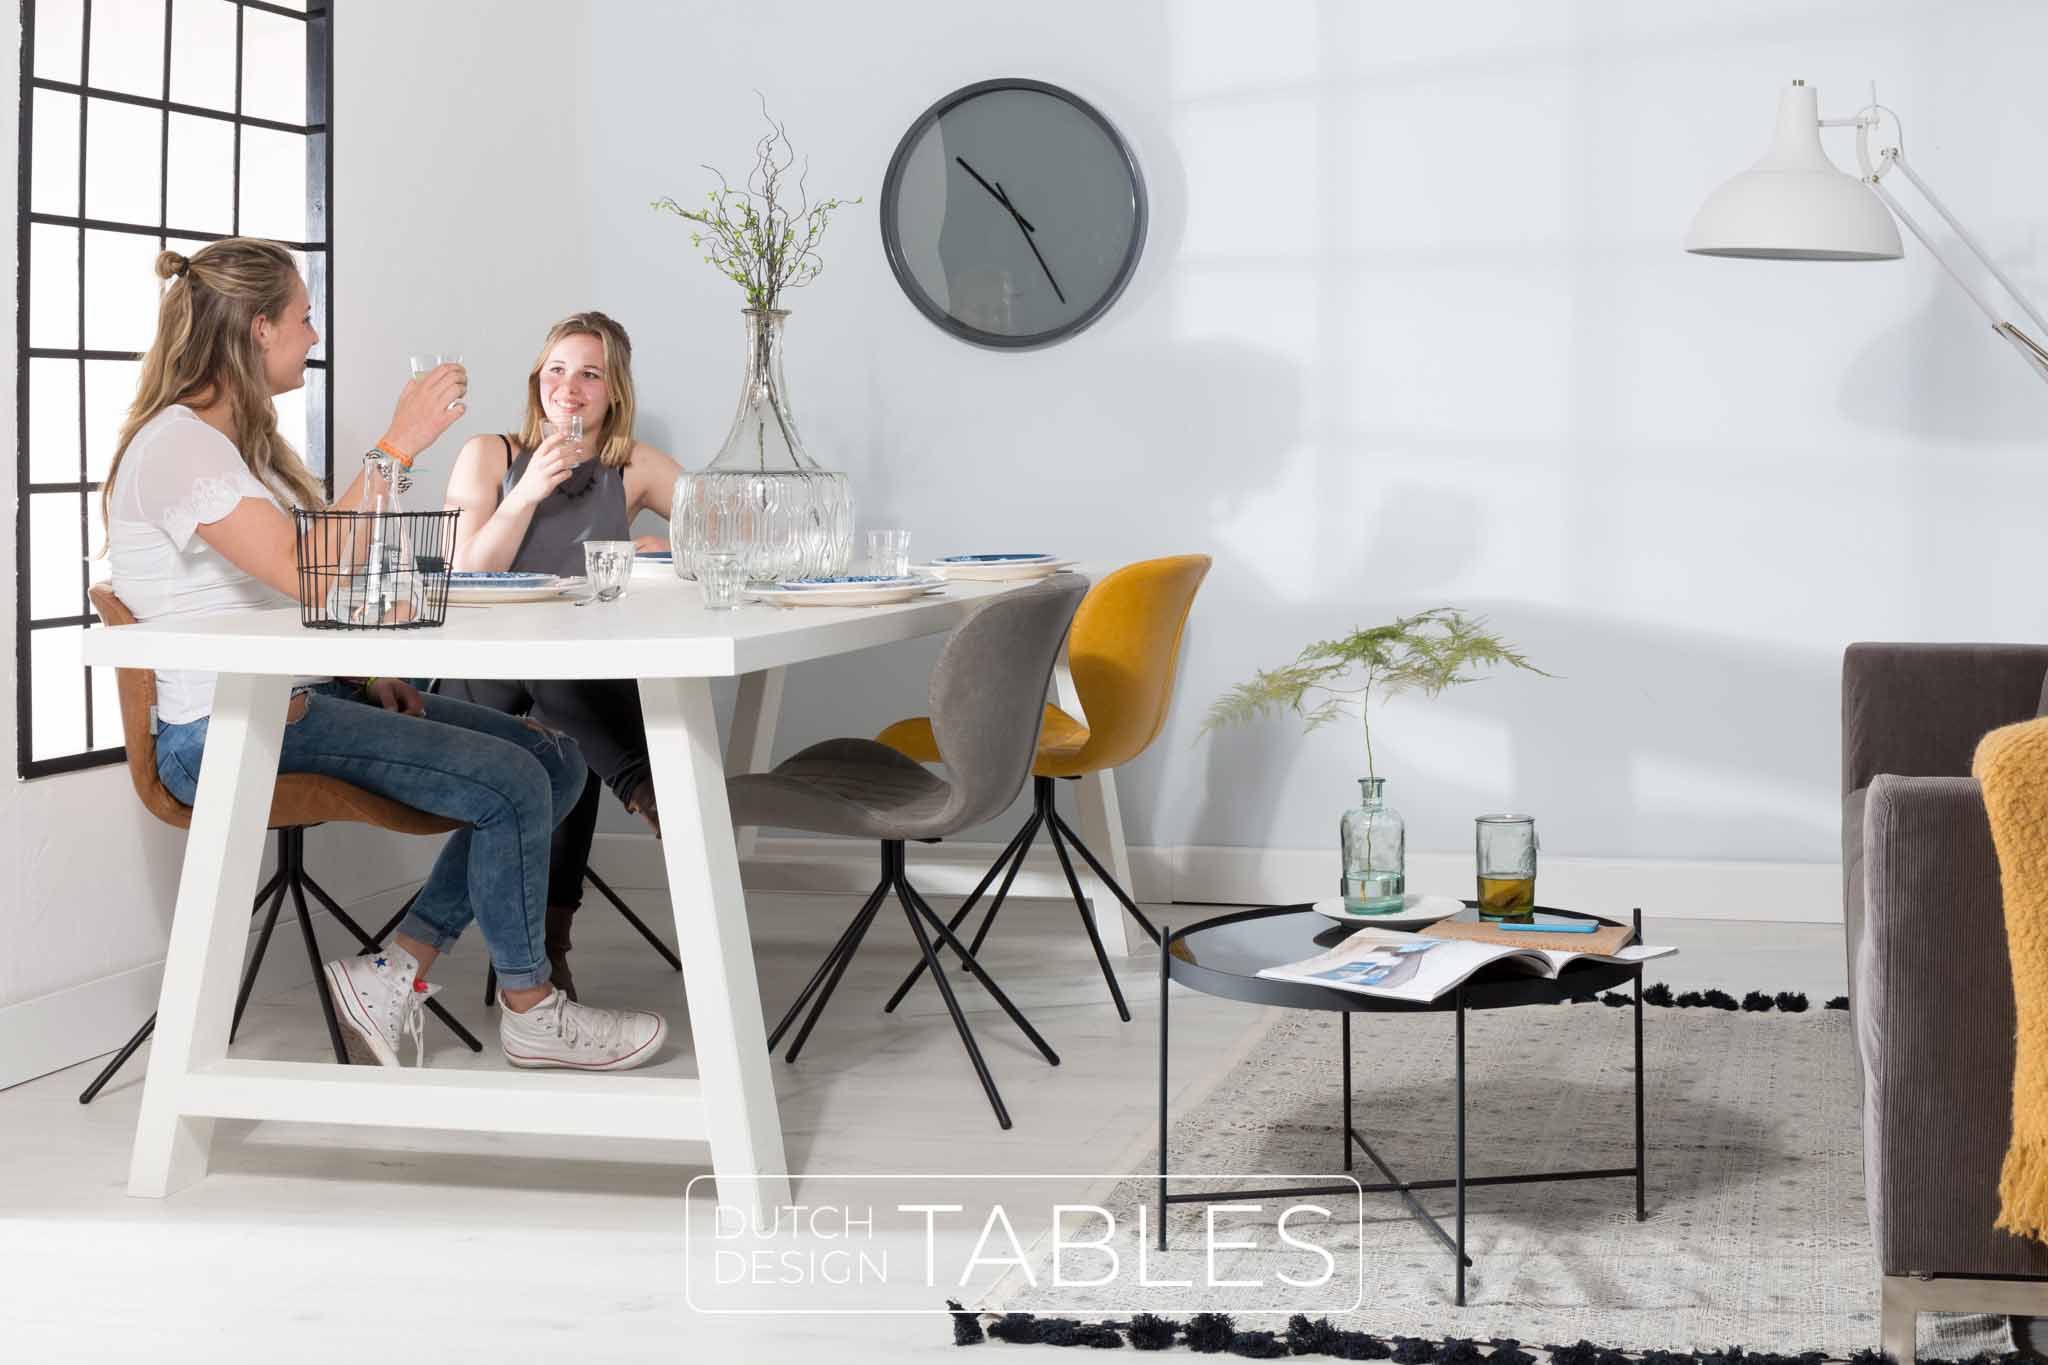 Stoel Zuiver OMG LL | Leather Look 5 kleuren! – Dutch Design Tables